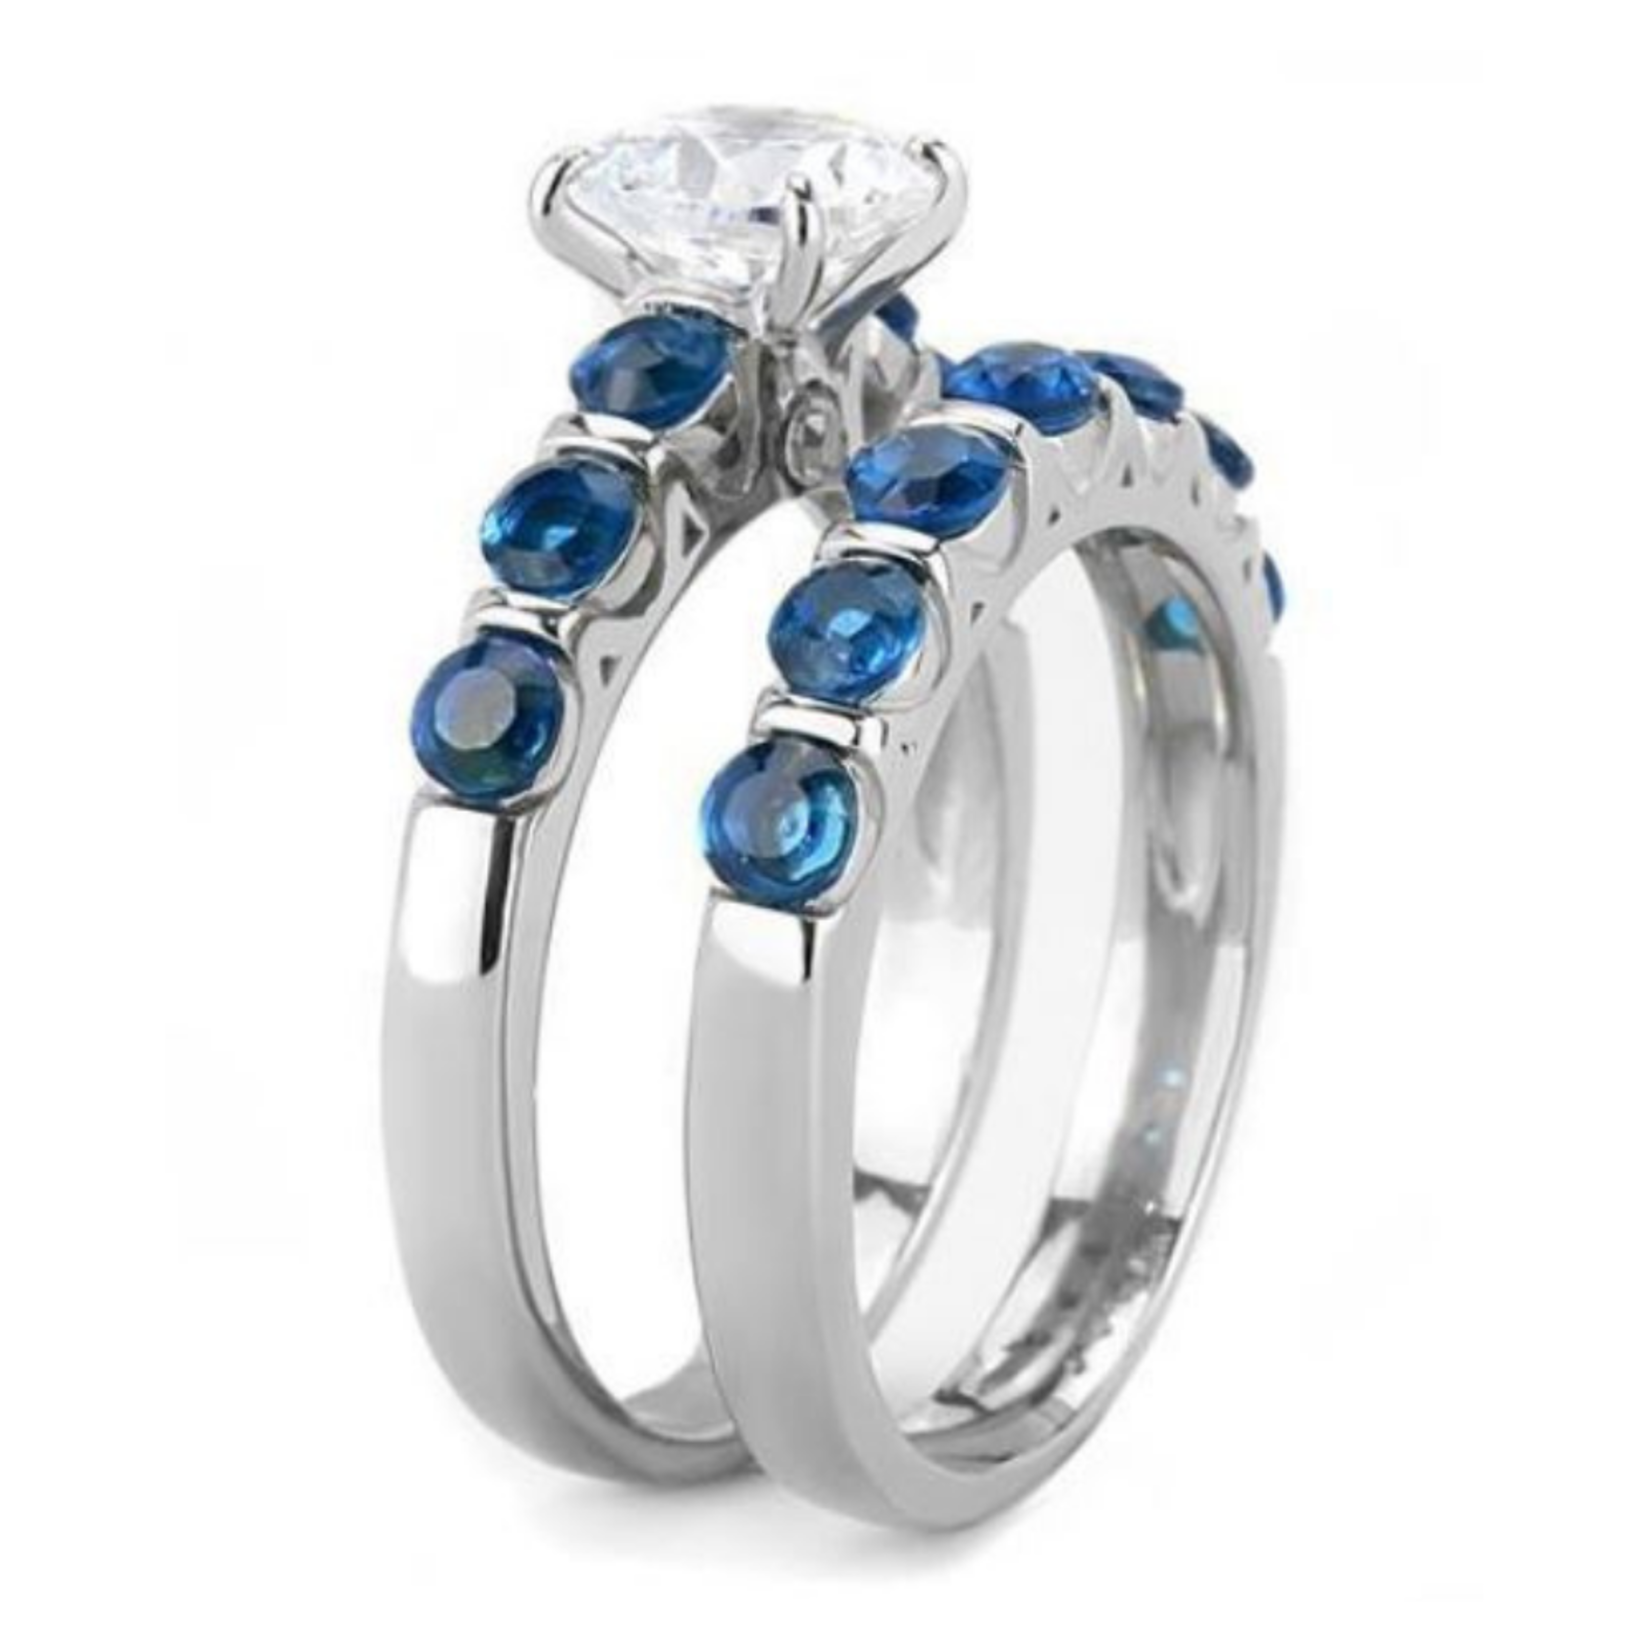 ROS Clear & Blue Stone Wedding Ring Set